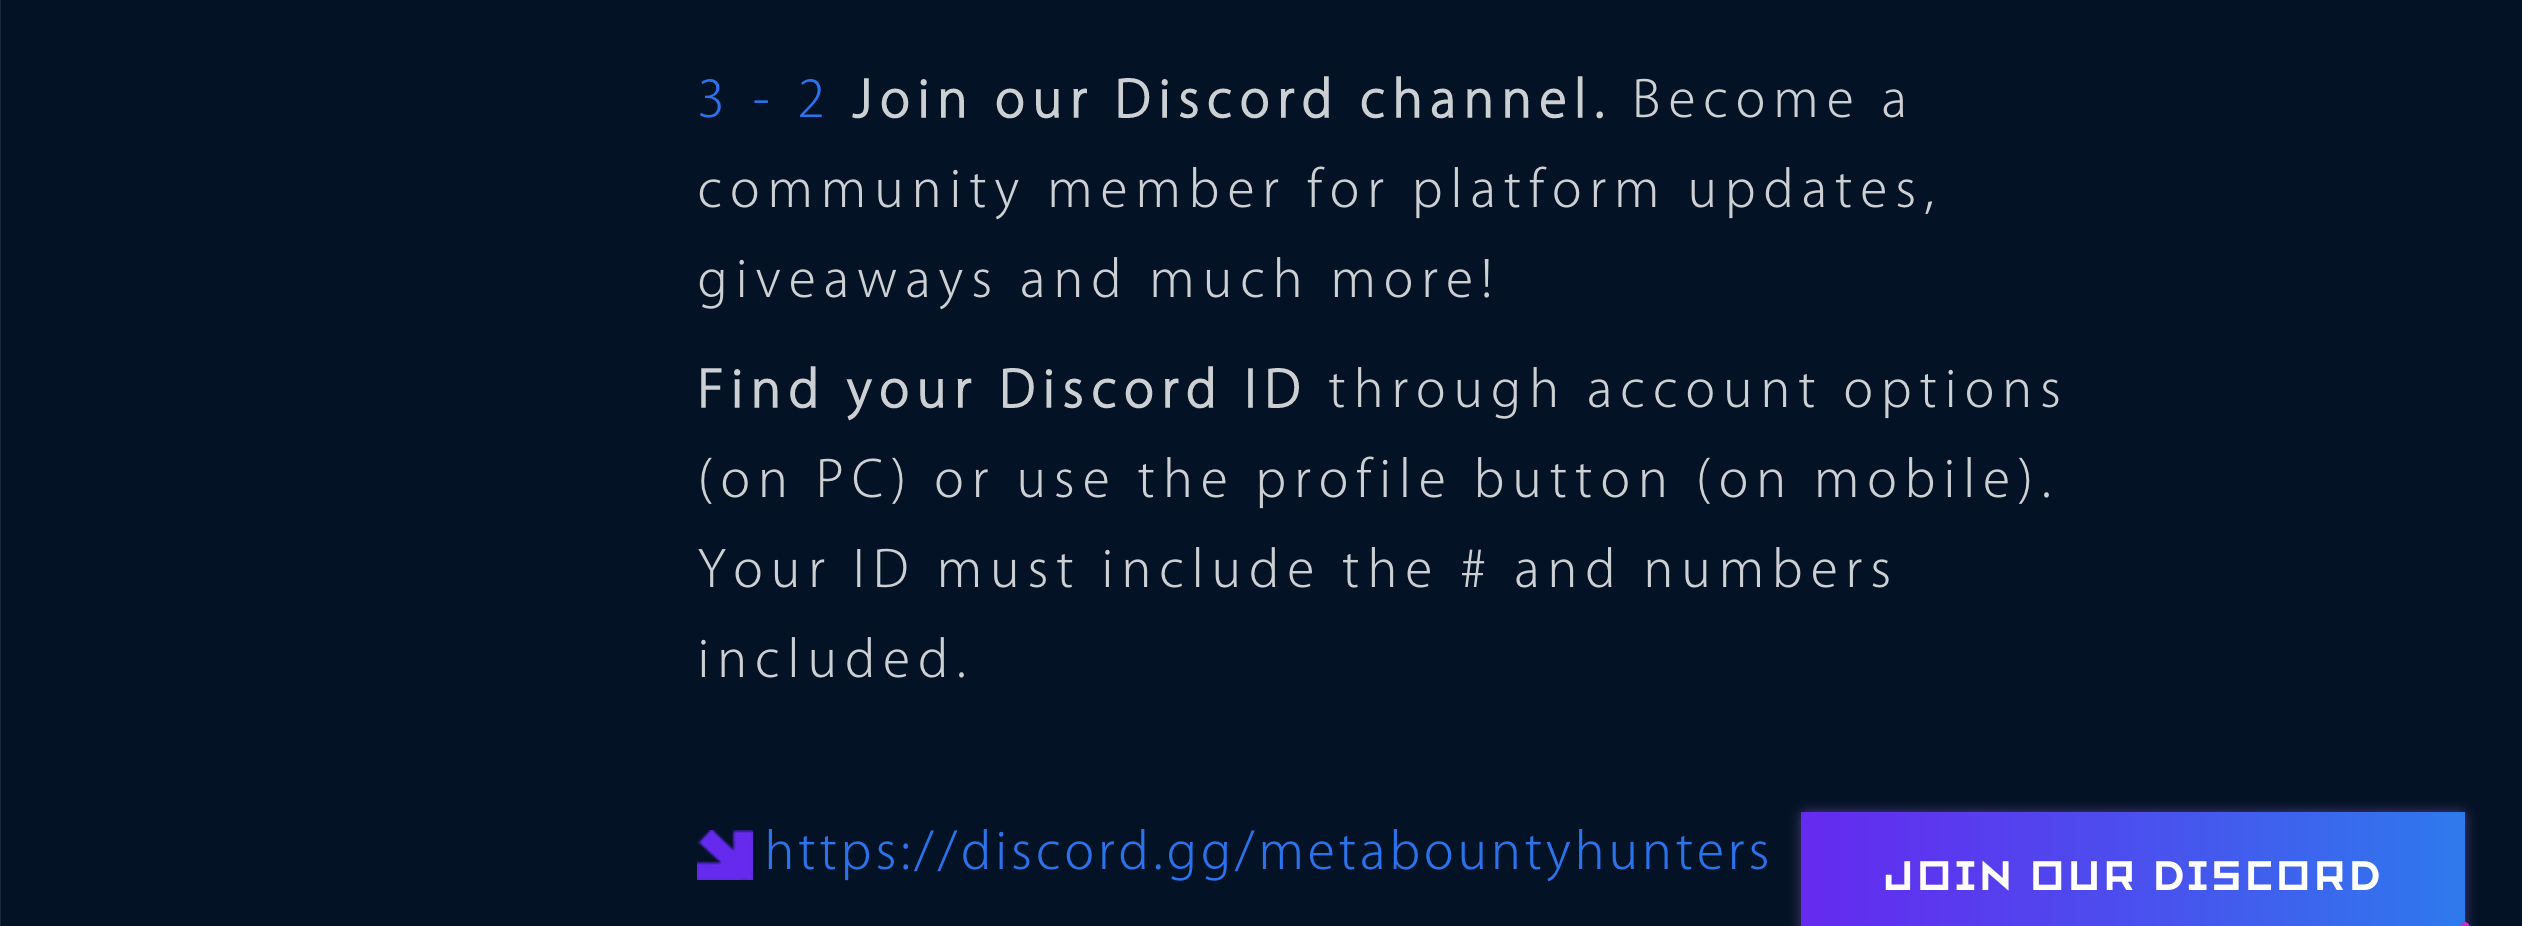 Meta Bounty Hunters